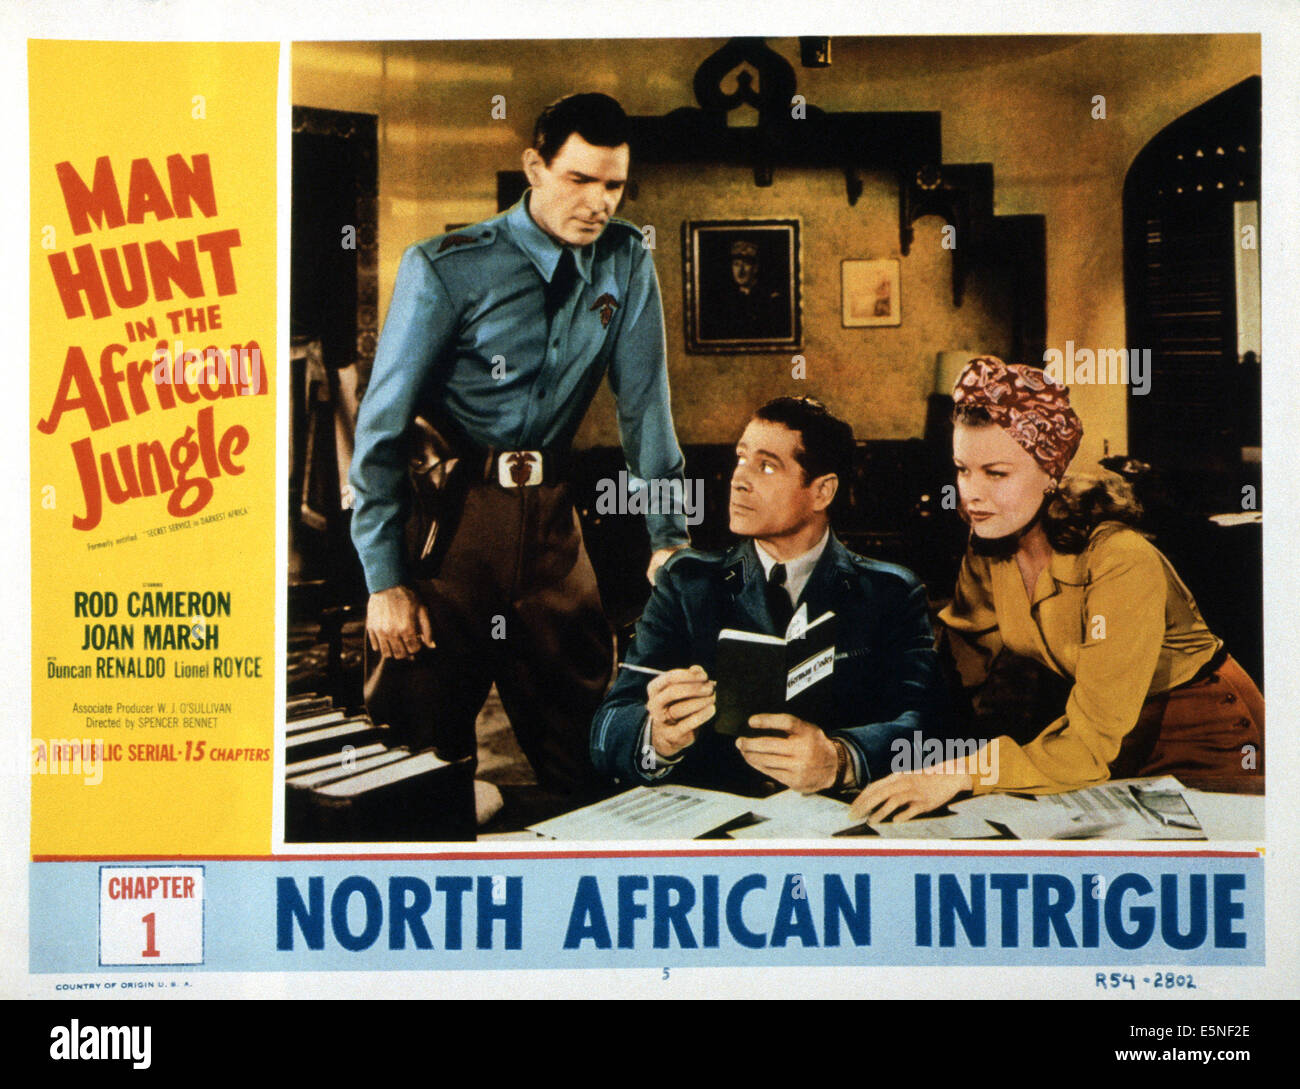 MANHUNT nella giungla africana, da sinistra: Rod Cameron, Duncan Renaldo, Joan Marsh, Capitolo 1: 'nord africana di intrigo, 1943 Foto Stock